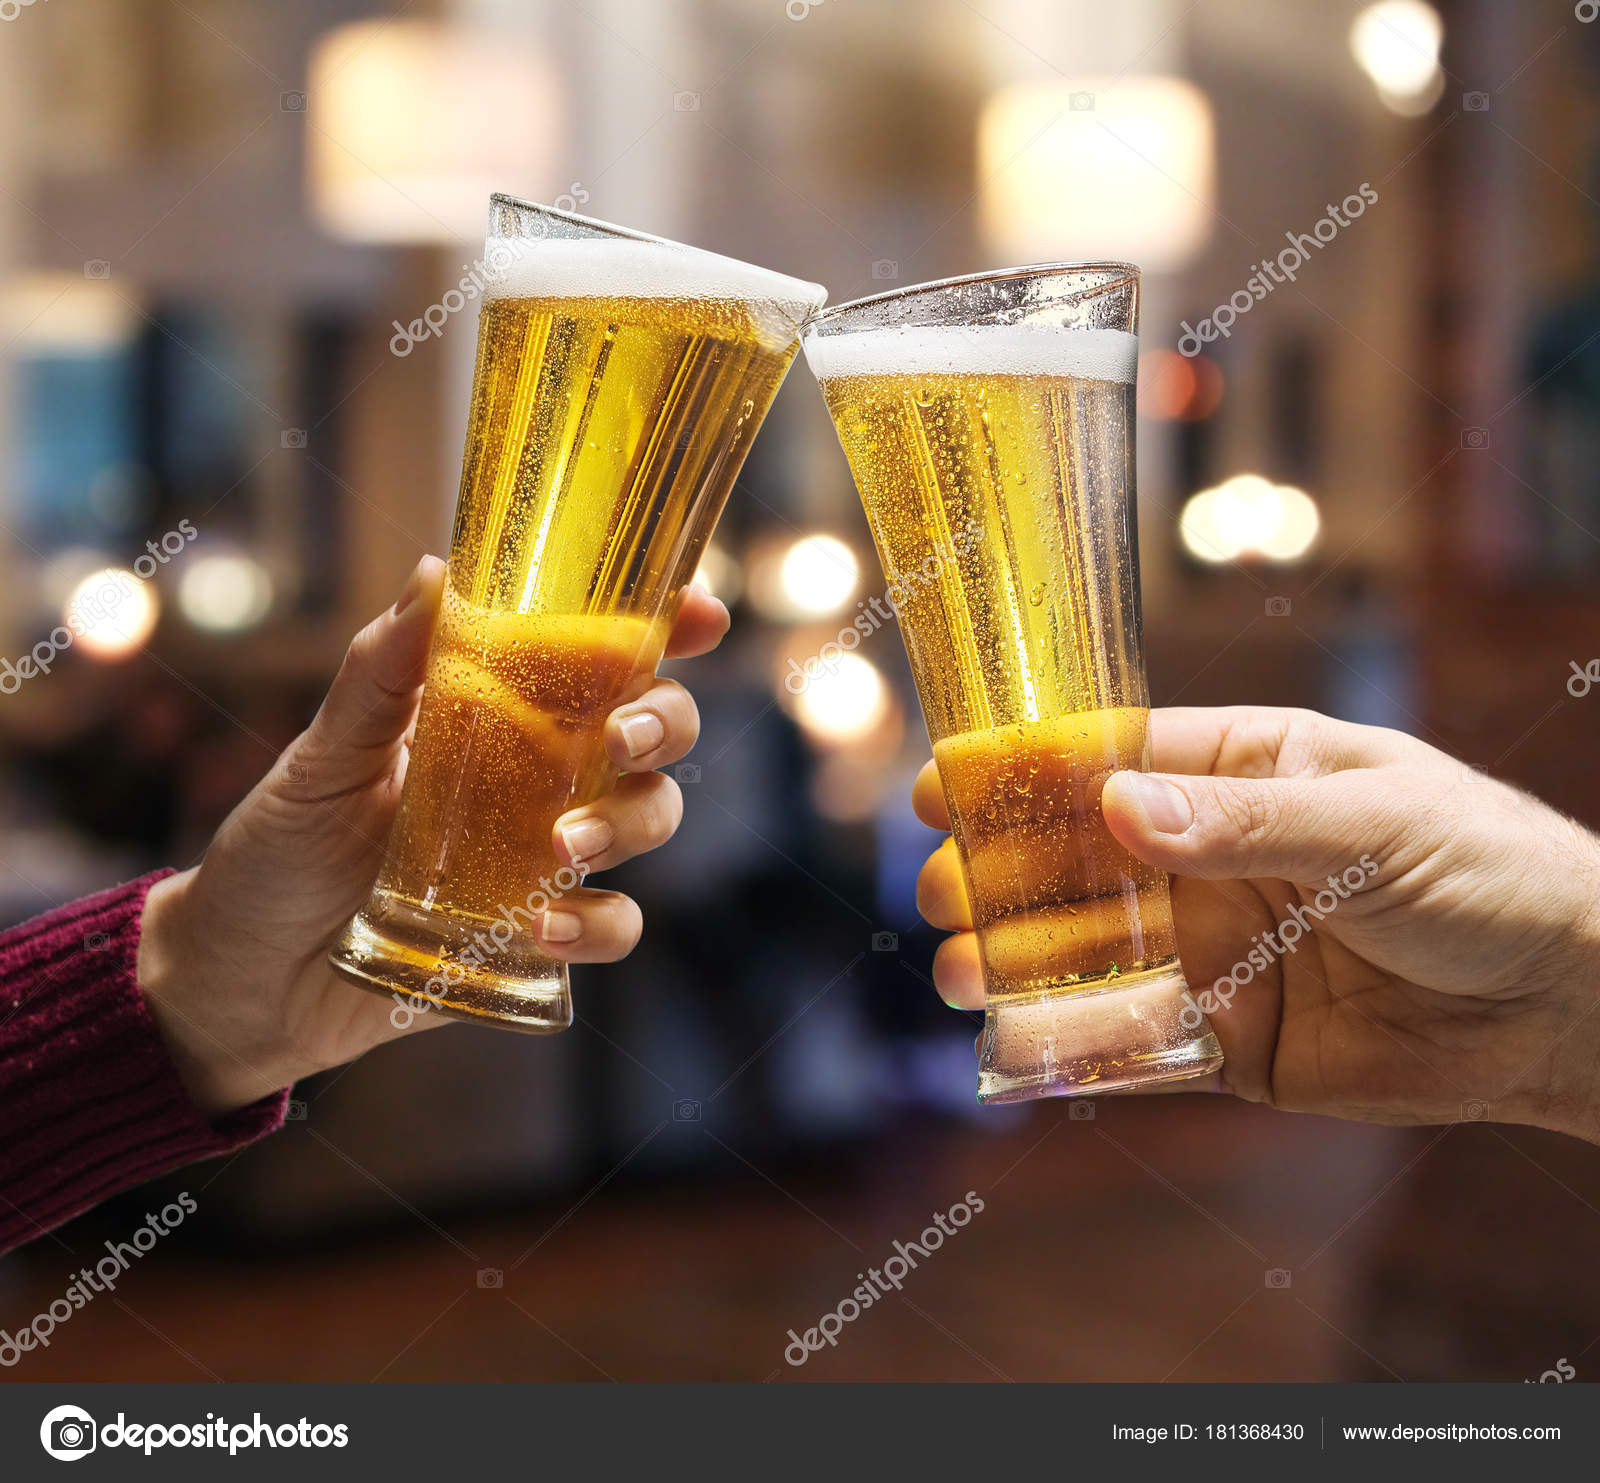 https://st3.depositphotos.com/1020804/18136/i/1600/depositphotos_181368430-stock-photo-beer-glasses-raised-in-a.jpg